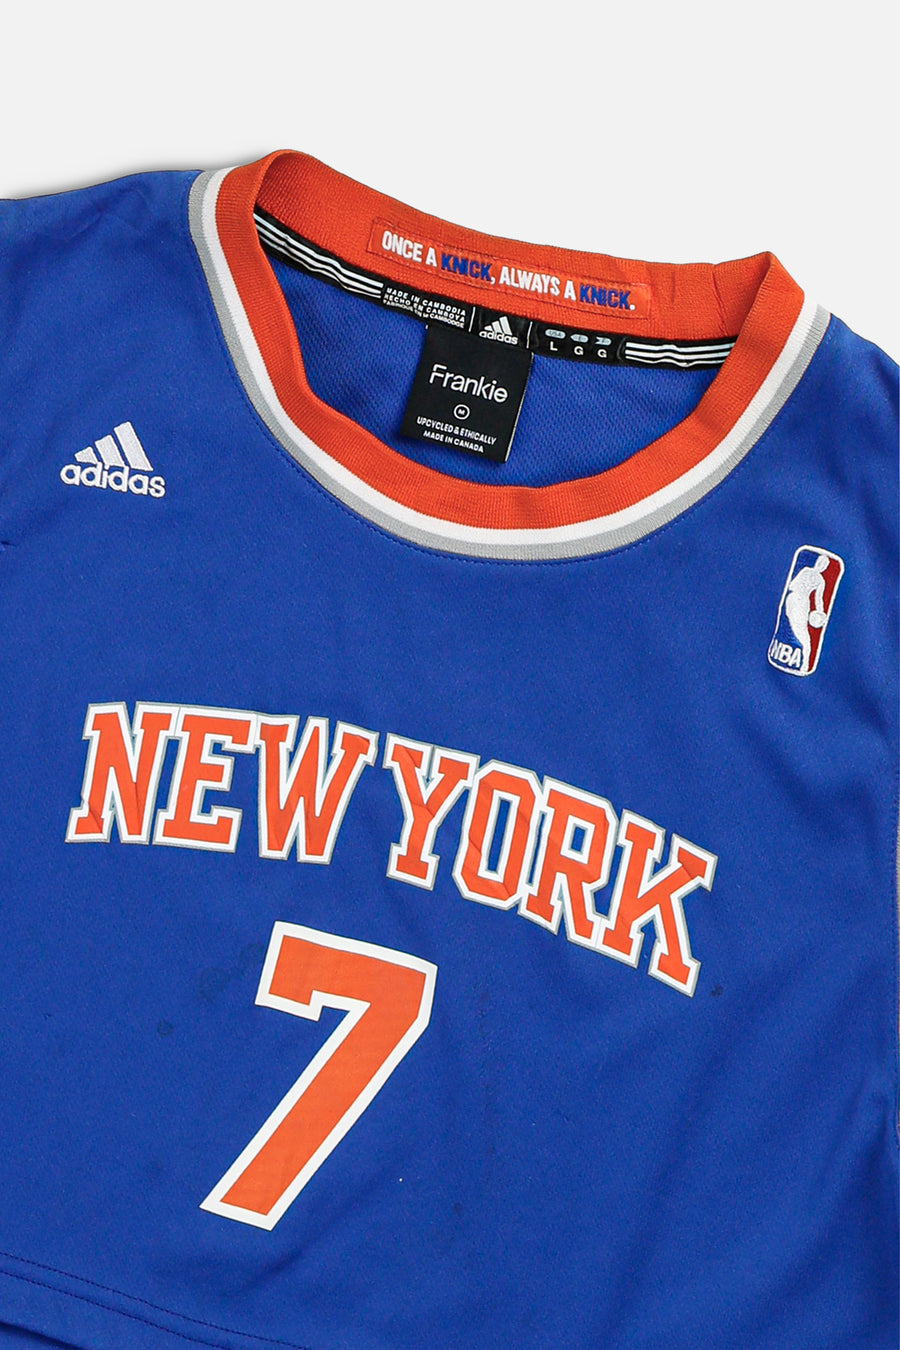 Rework NY Knicks NBA Crop Jersey - M